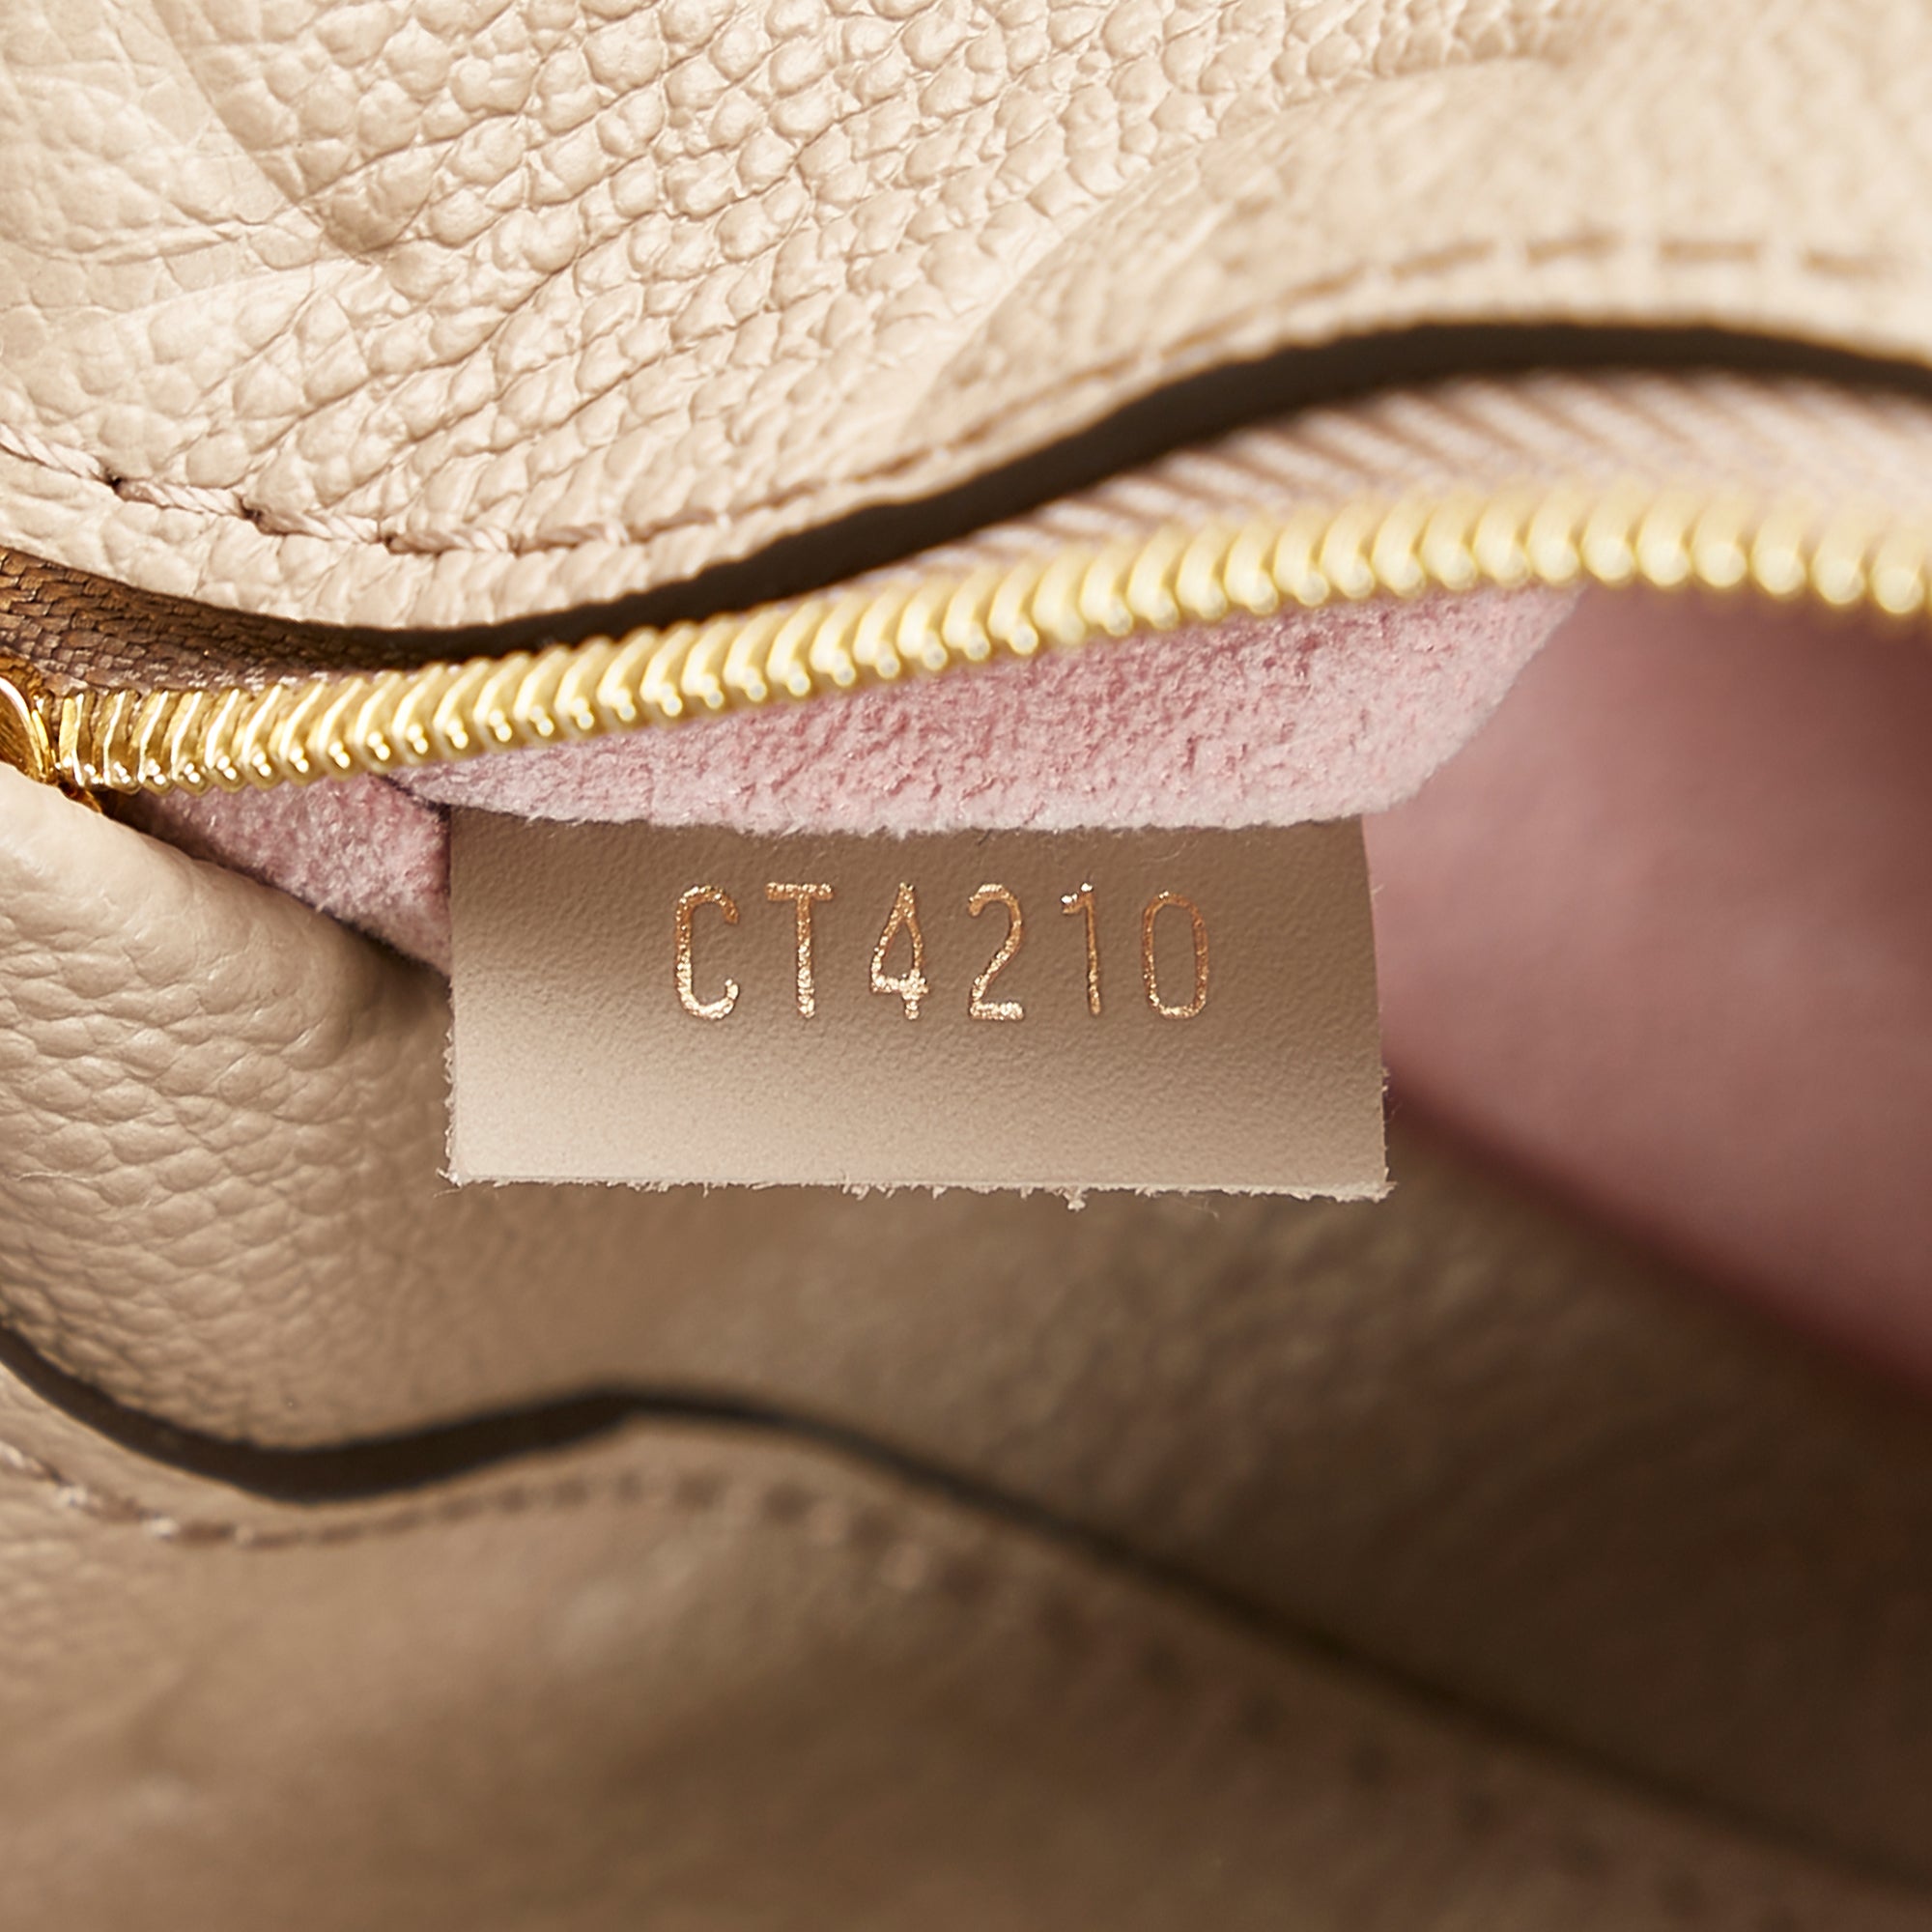 Louis Vuitton Beige Monogram Empreinte Leather Montsouris PM